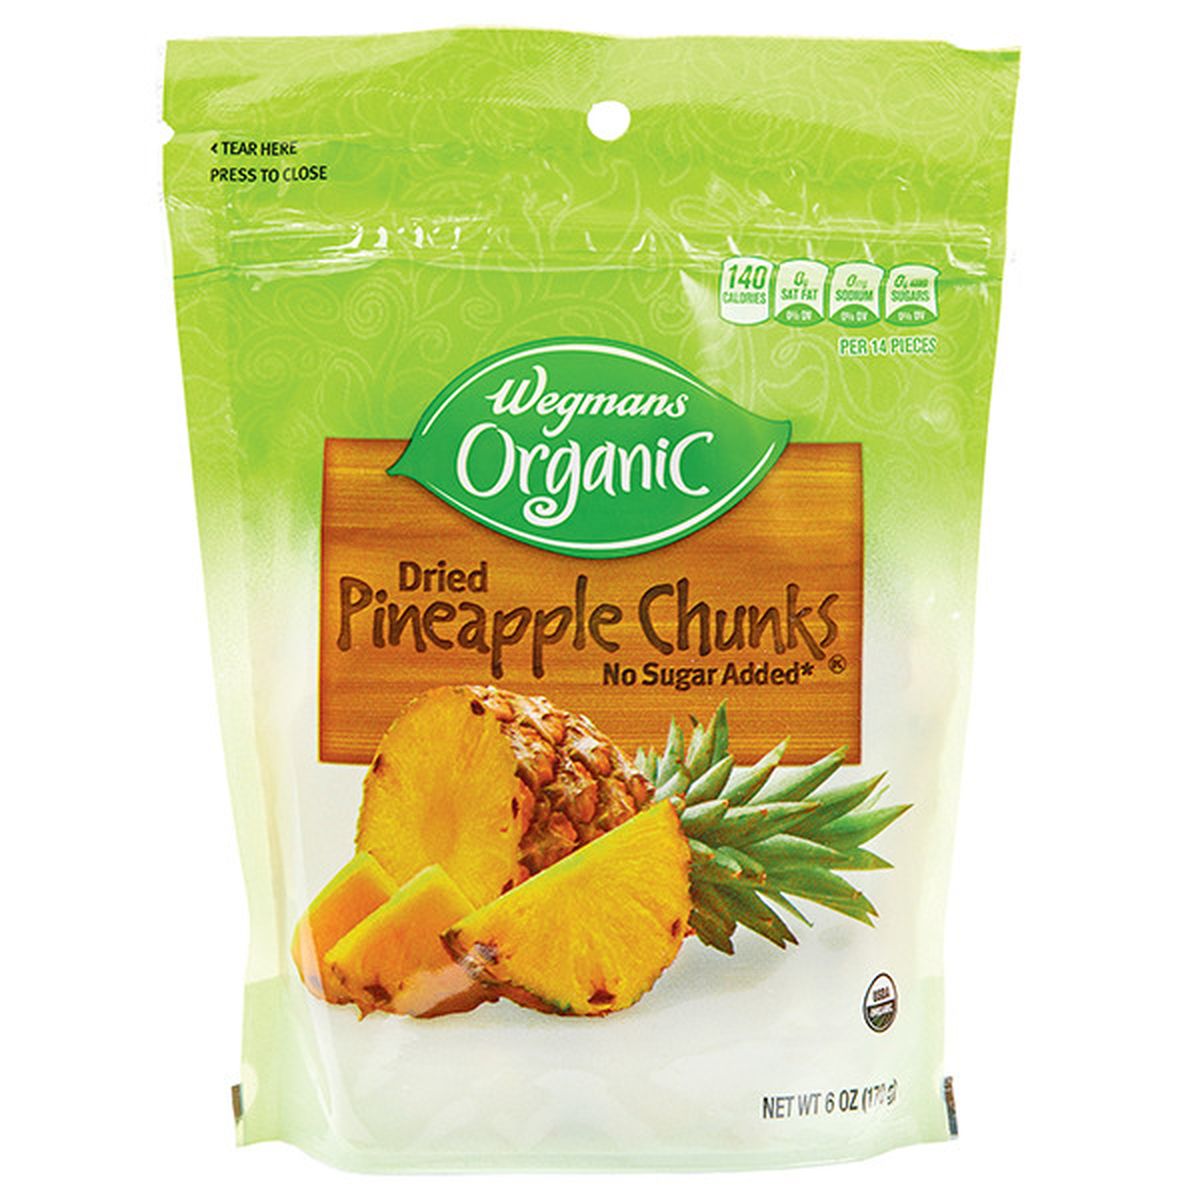 Calories in Wegmans Organic Dried Pineapple Chunks